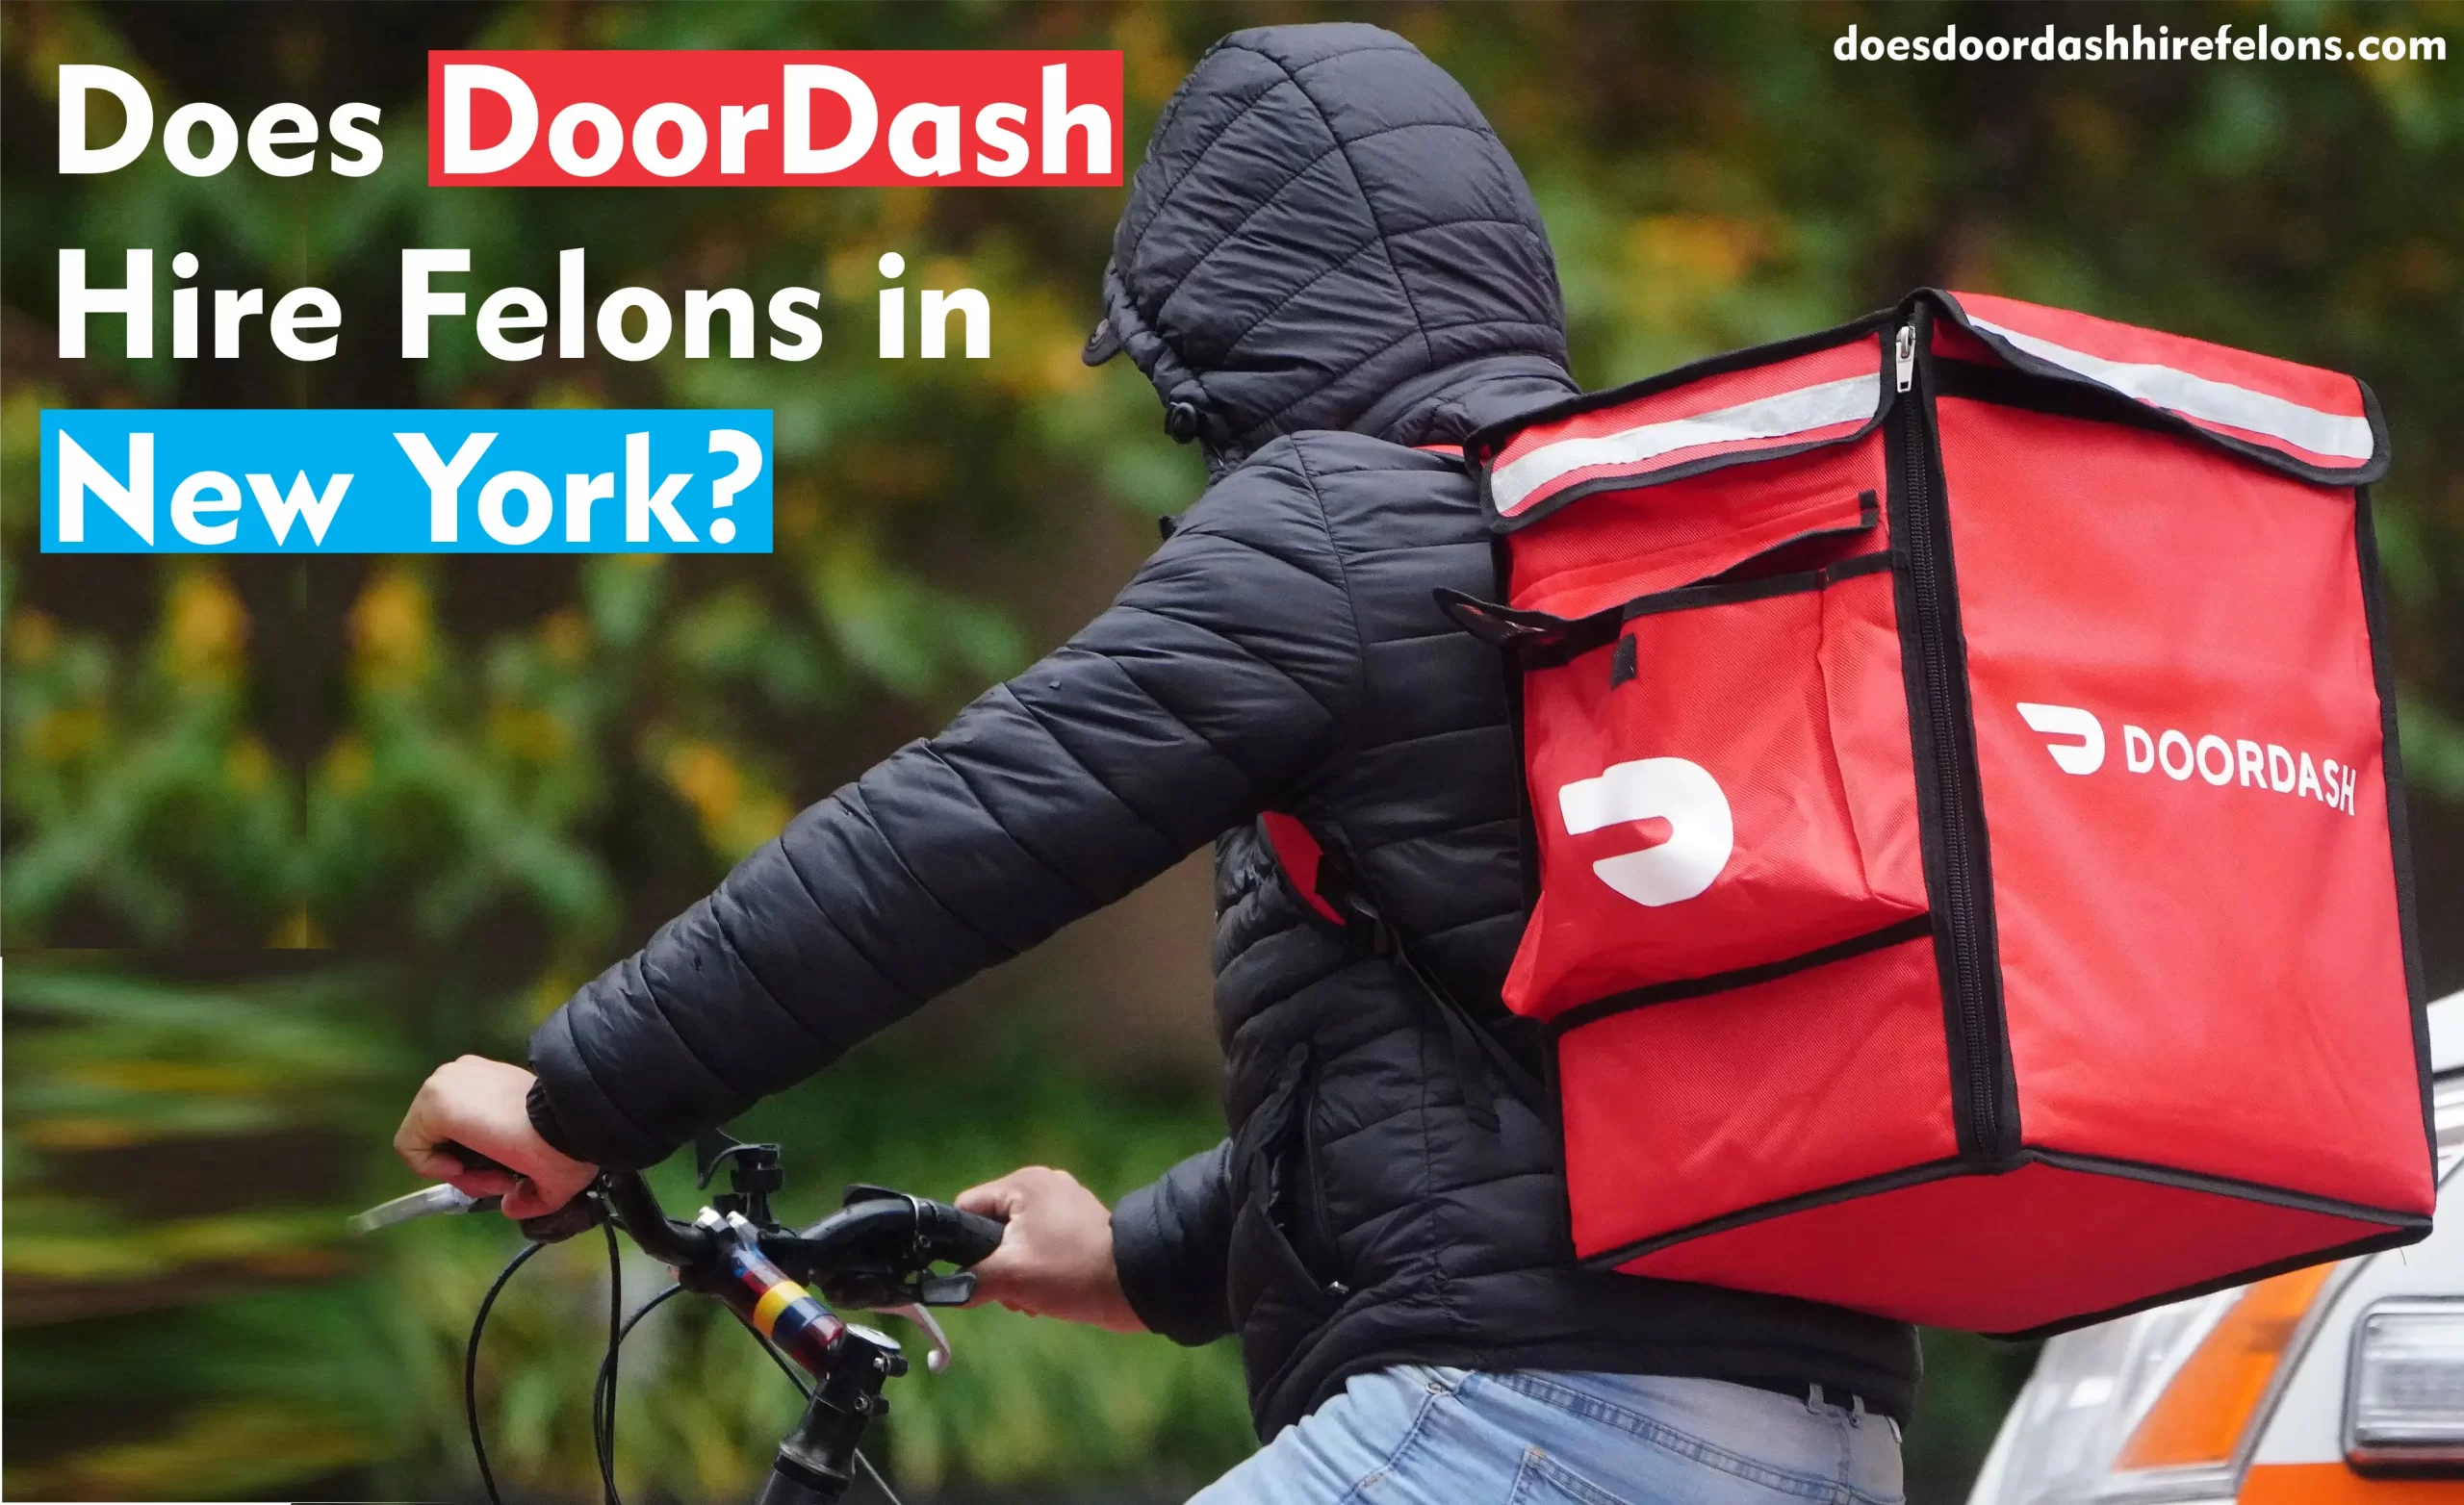 Does DoorDash Hire Felons in New York?